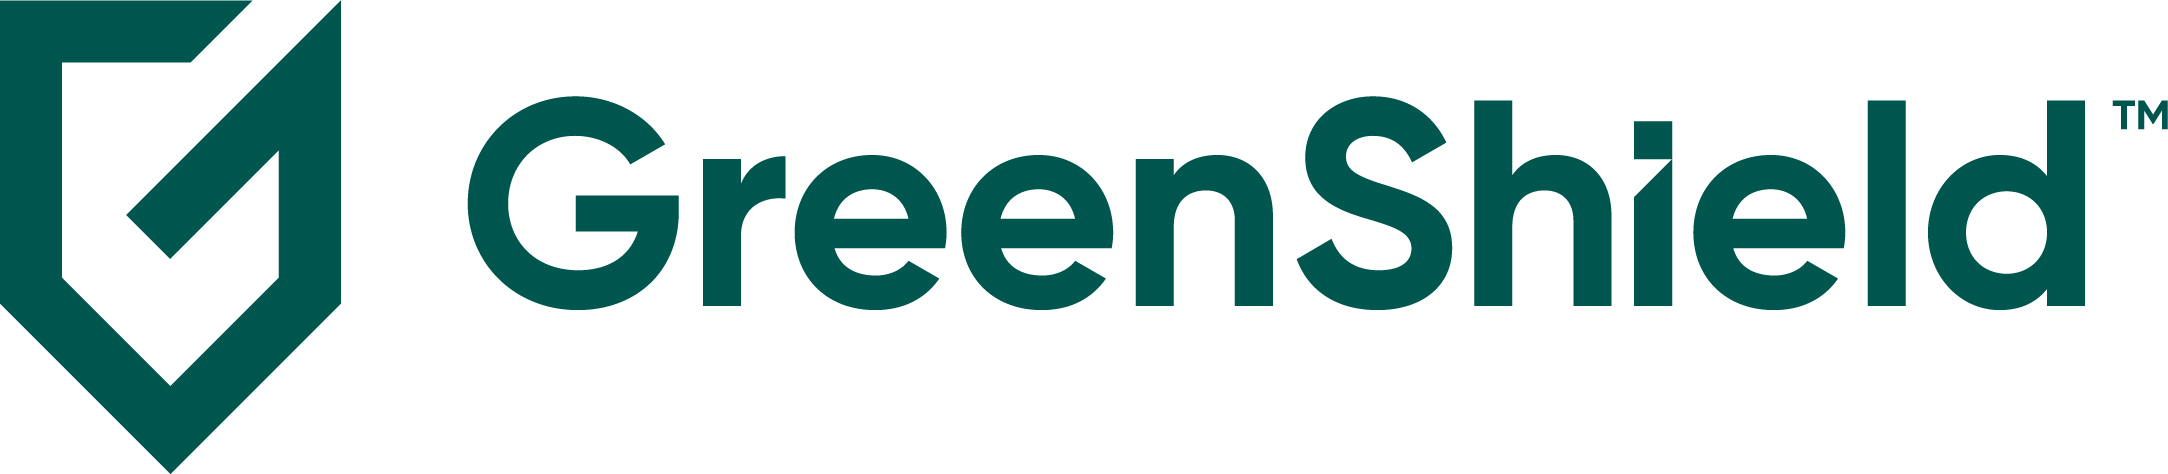 GreenShield Logo Green RGB